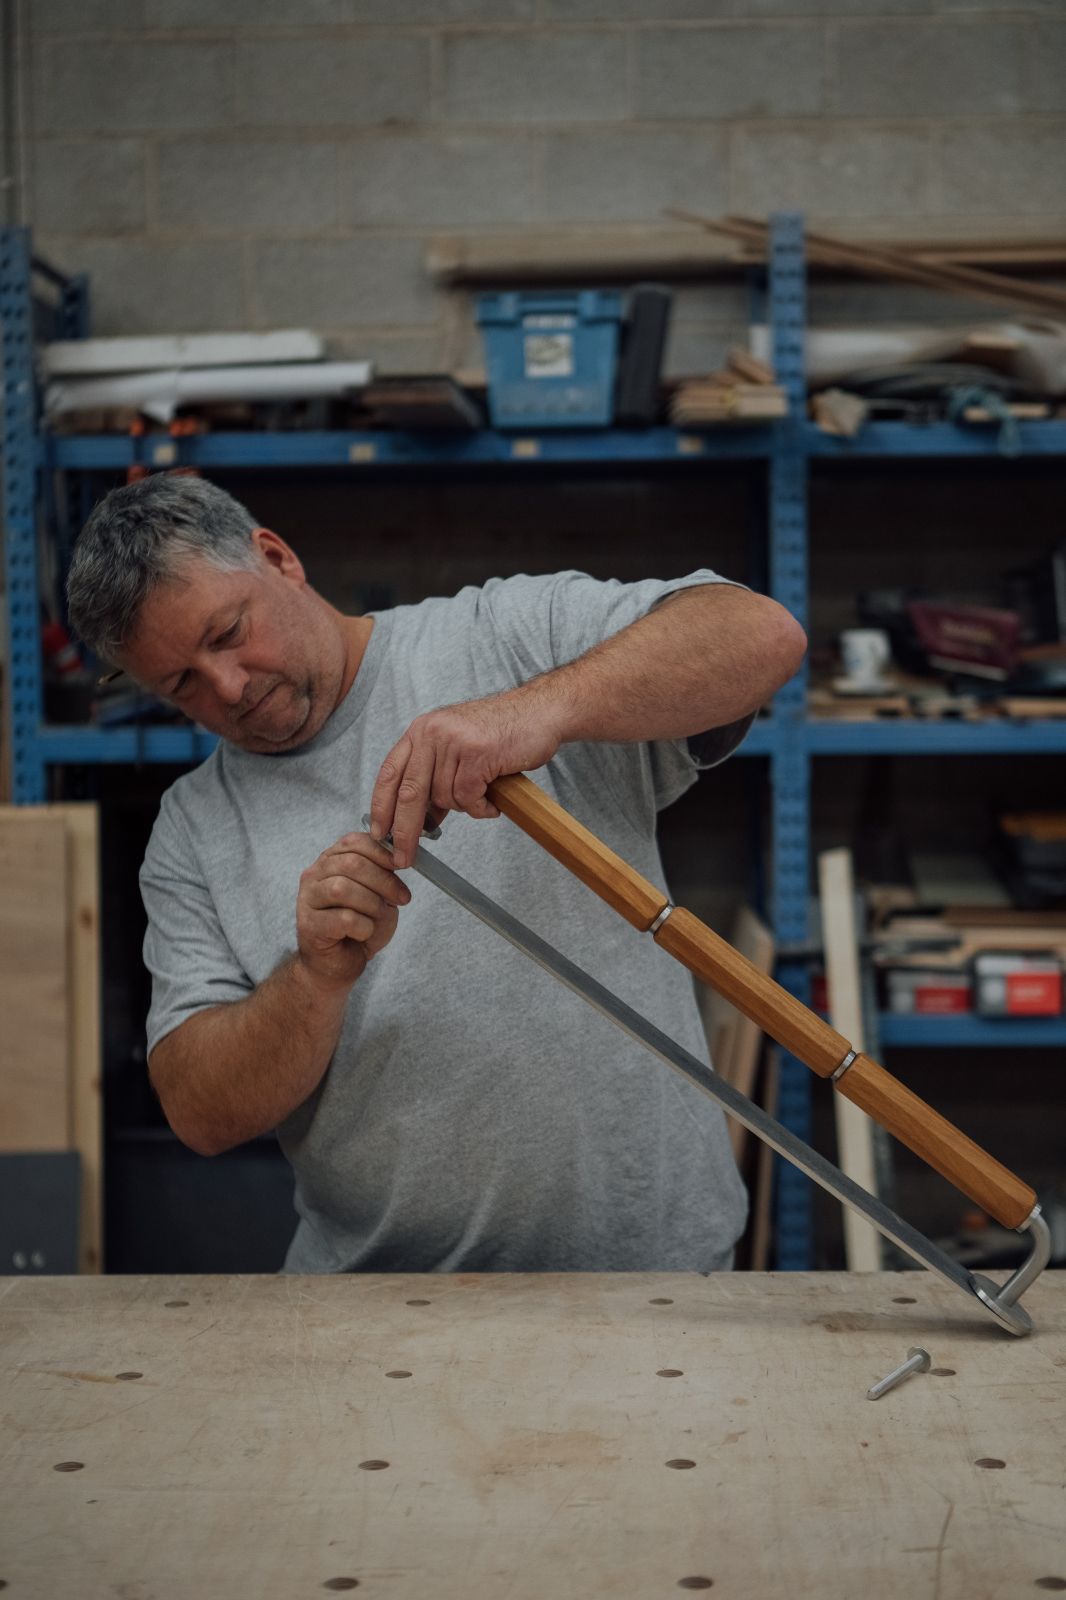 Craftsman assembling the long door handle in a workshop in Sheffield with blue unistrut shelving behind him.